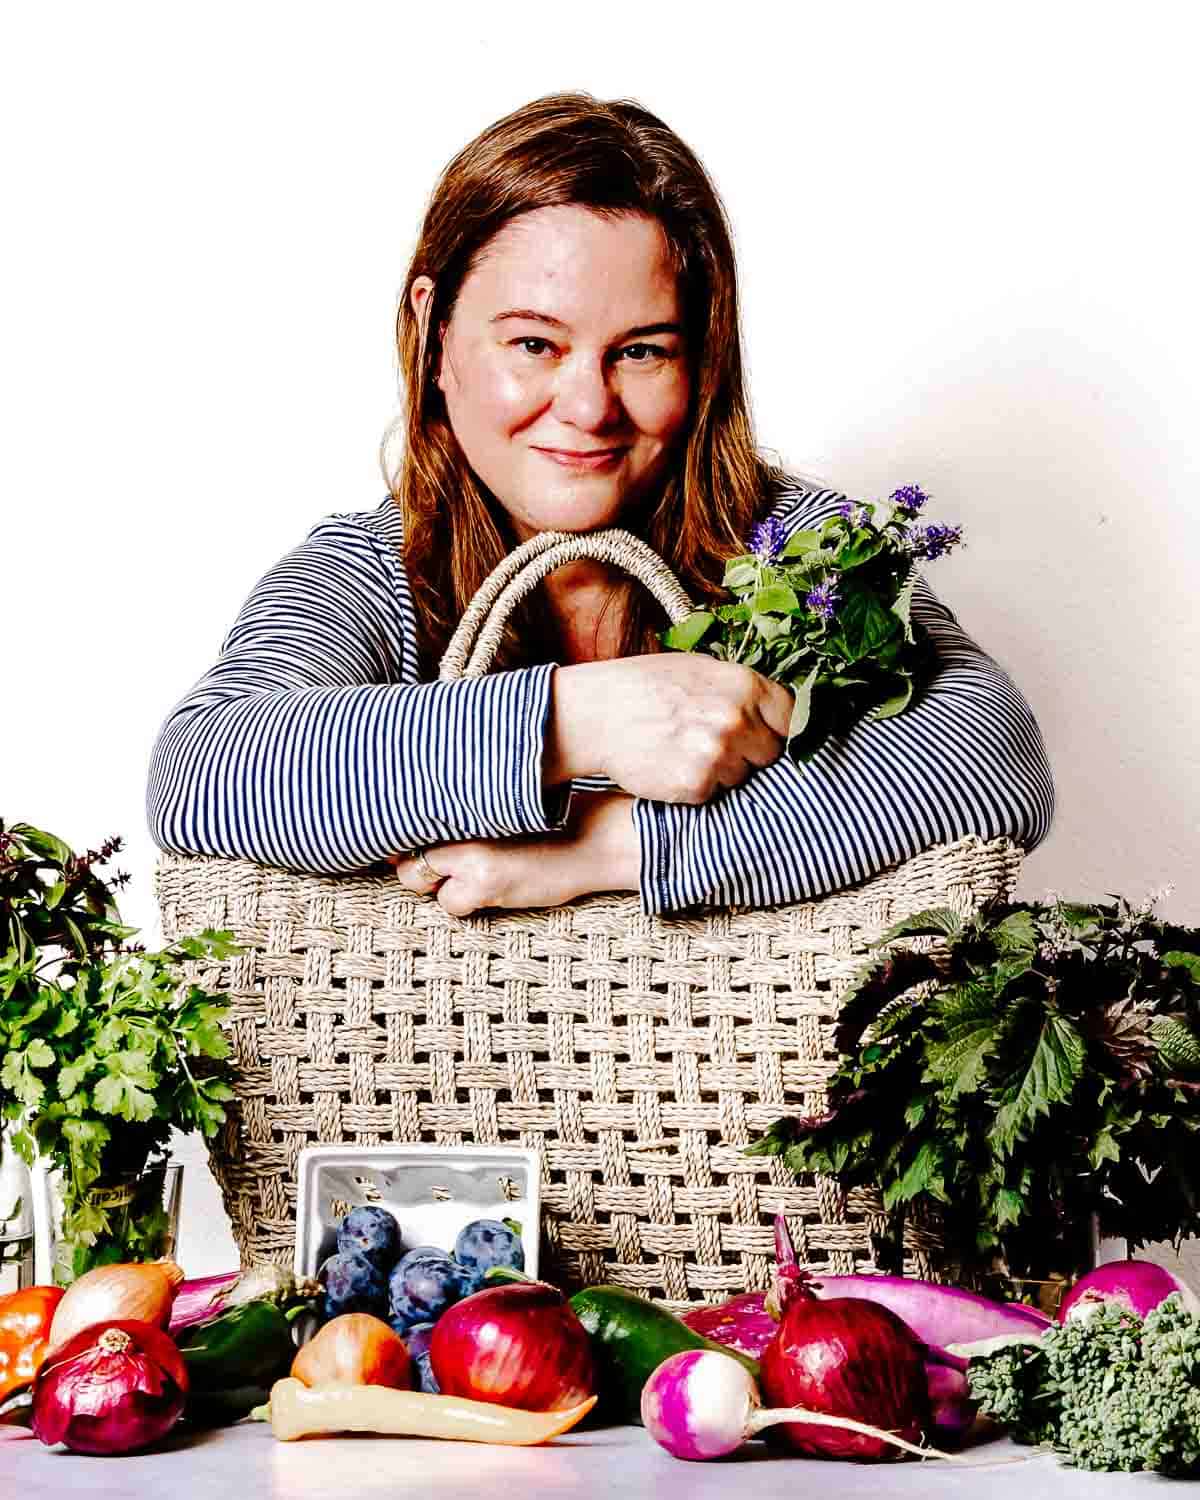 Kari hugging her market basket while surrounded by fresh produce.